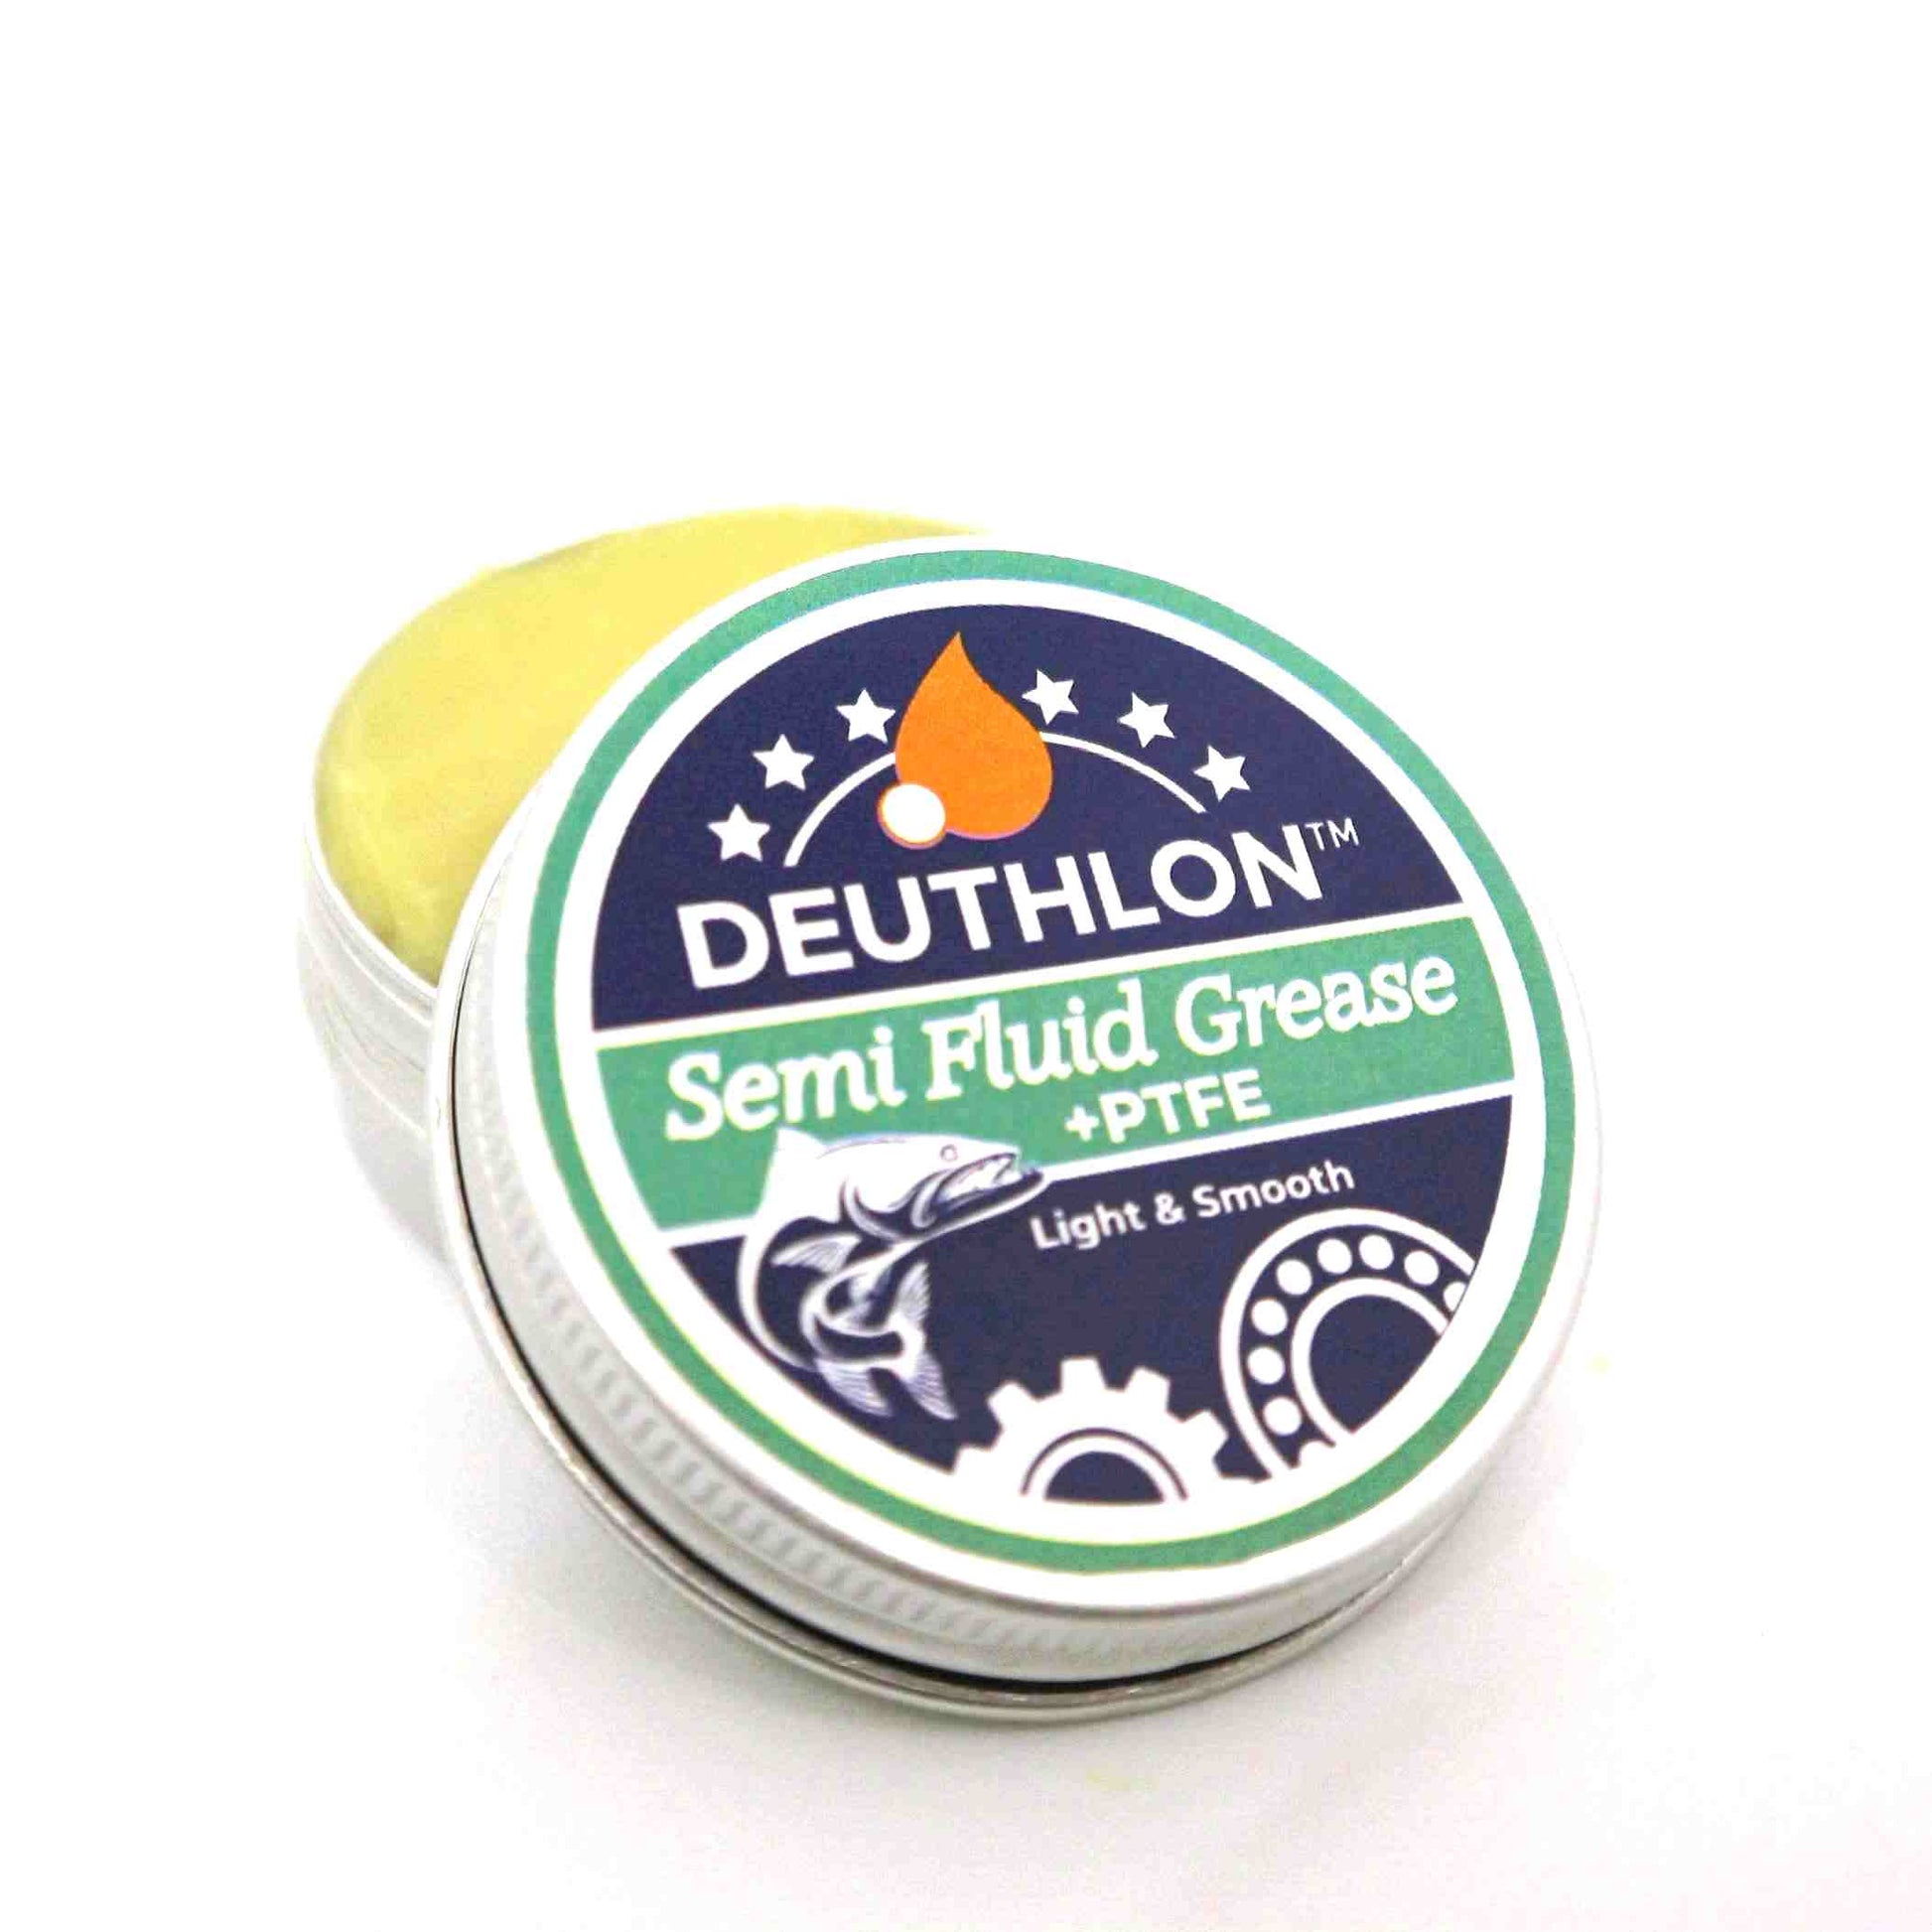 DEUTHLON Semi Fluid Grease | Balancing between durability and low coefficient - Deuthlon